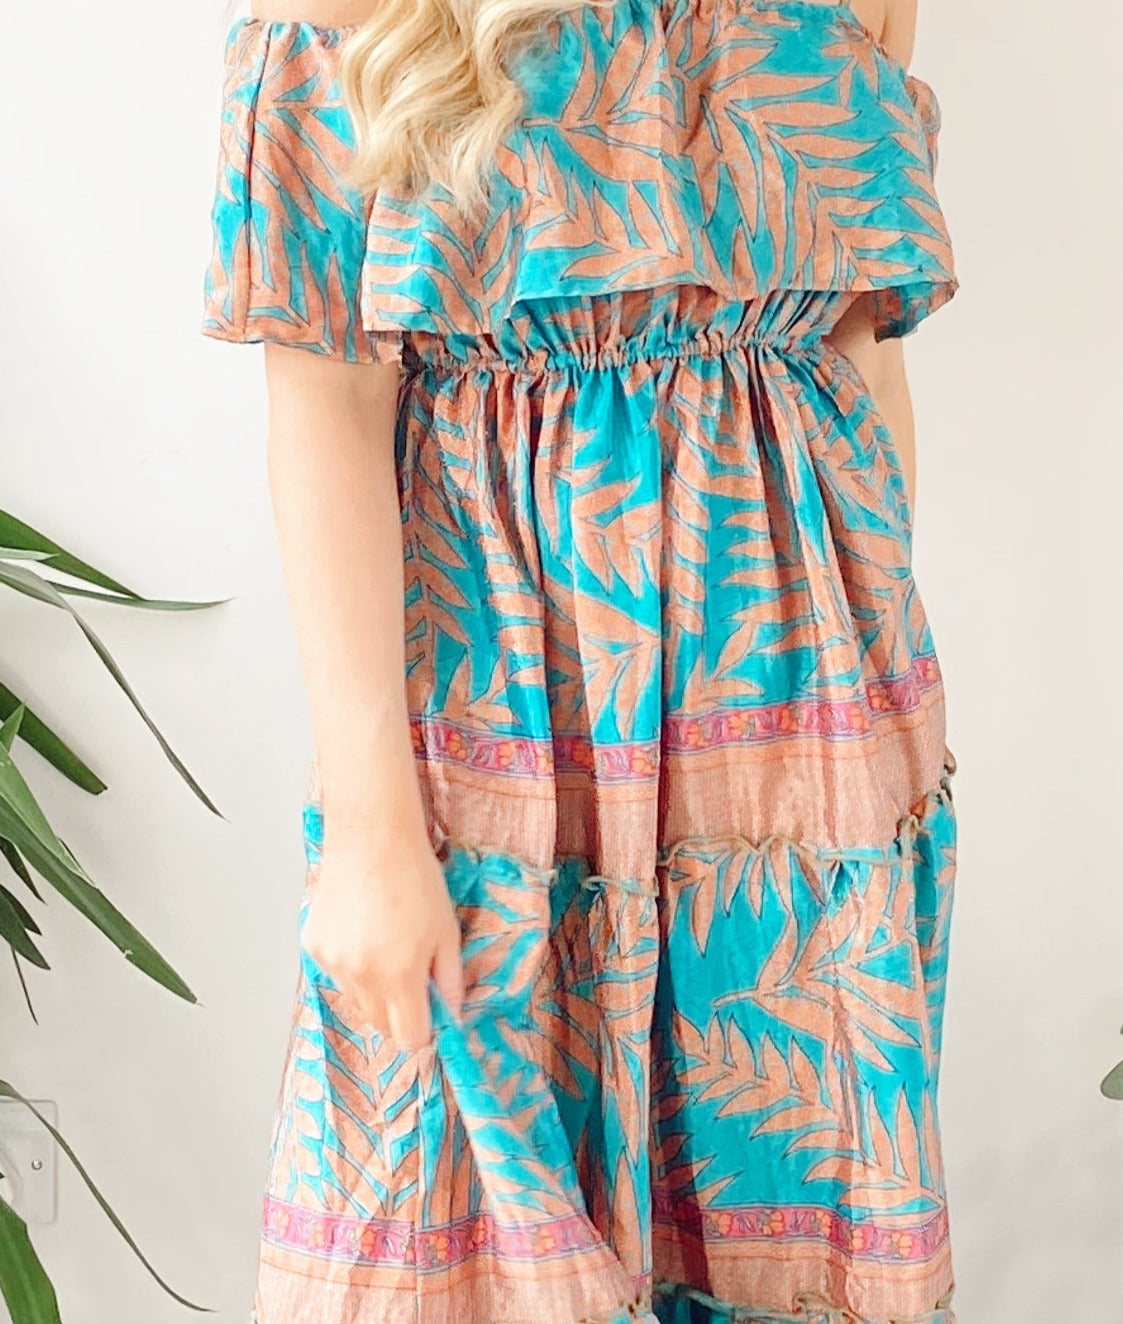 Elara peach/turquoise printed vintage-silk bardot frill dress free-size UK 8-16DRESSES